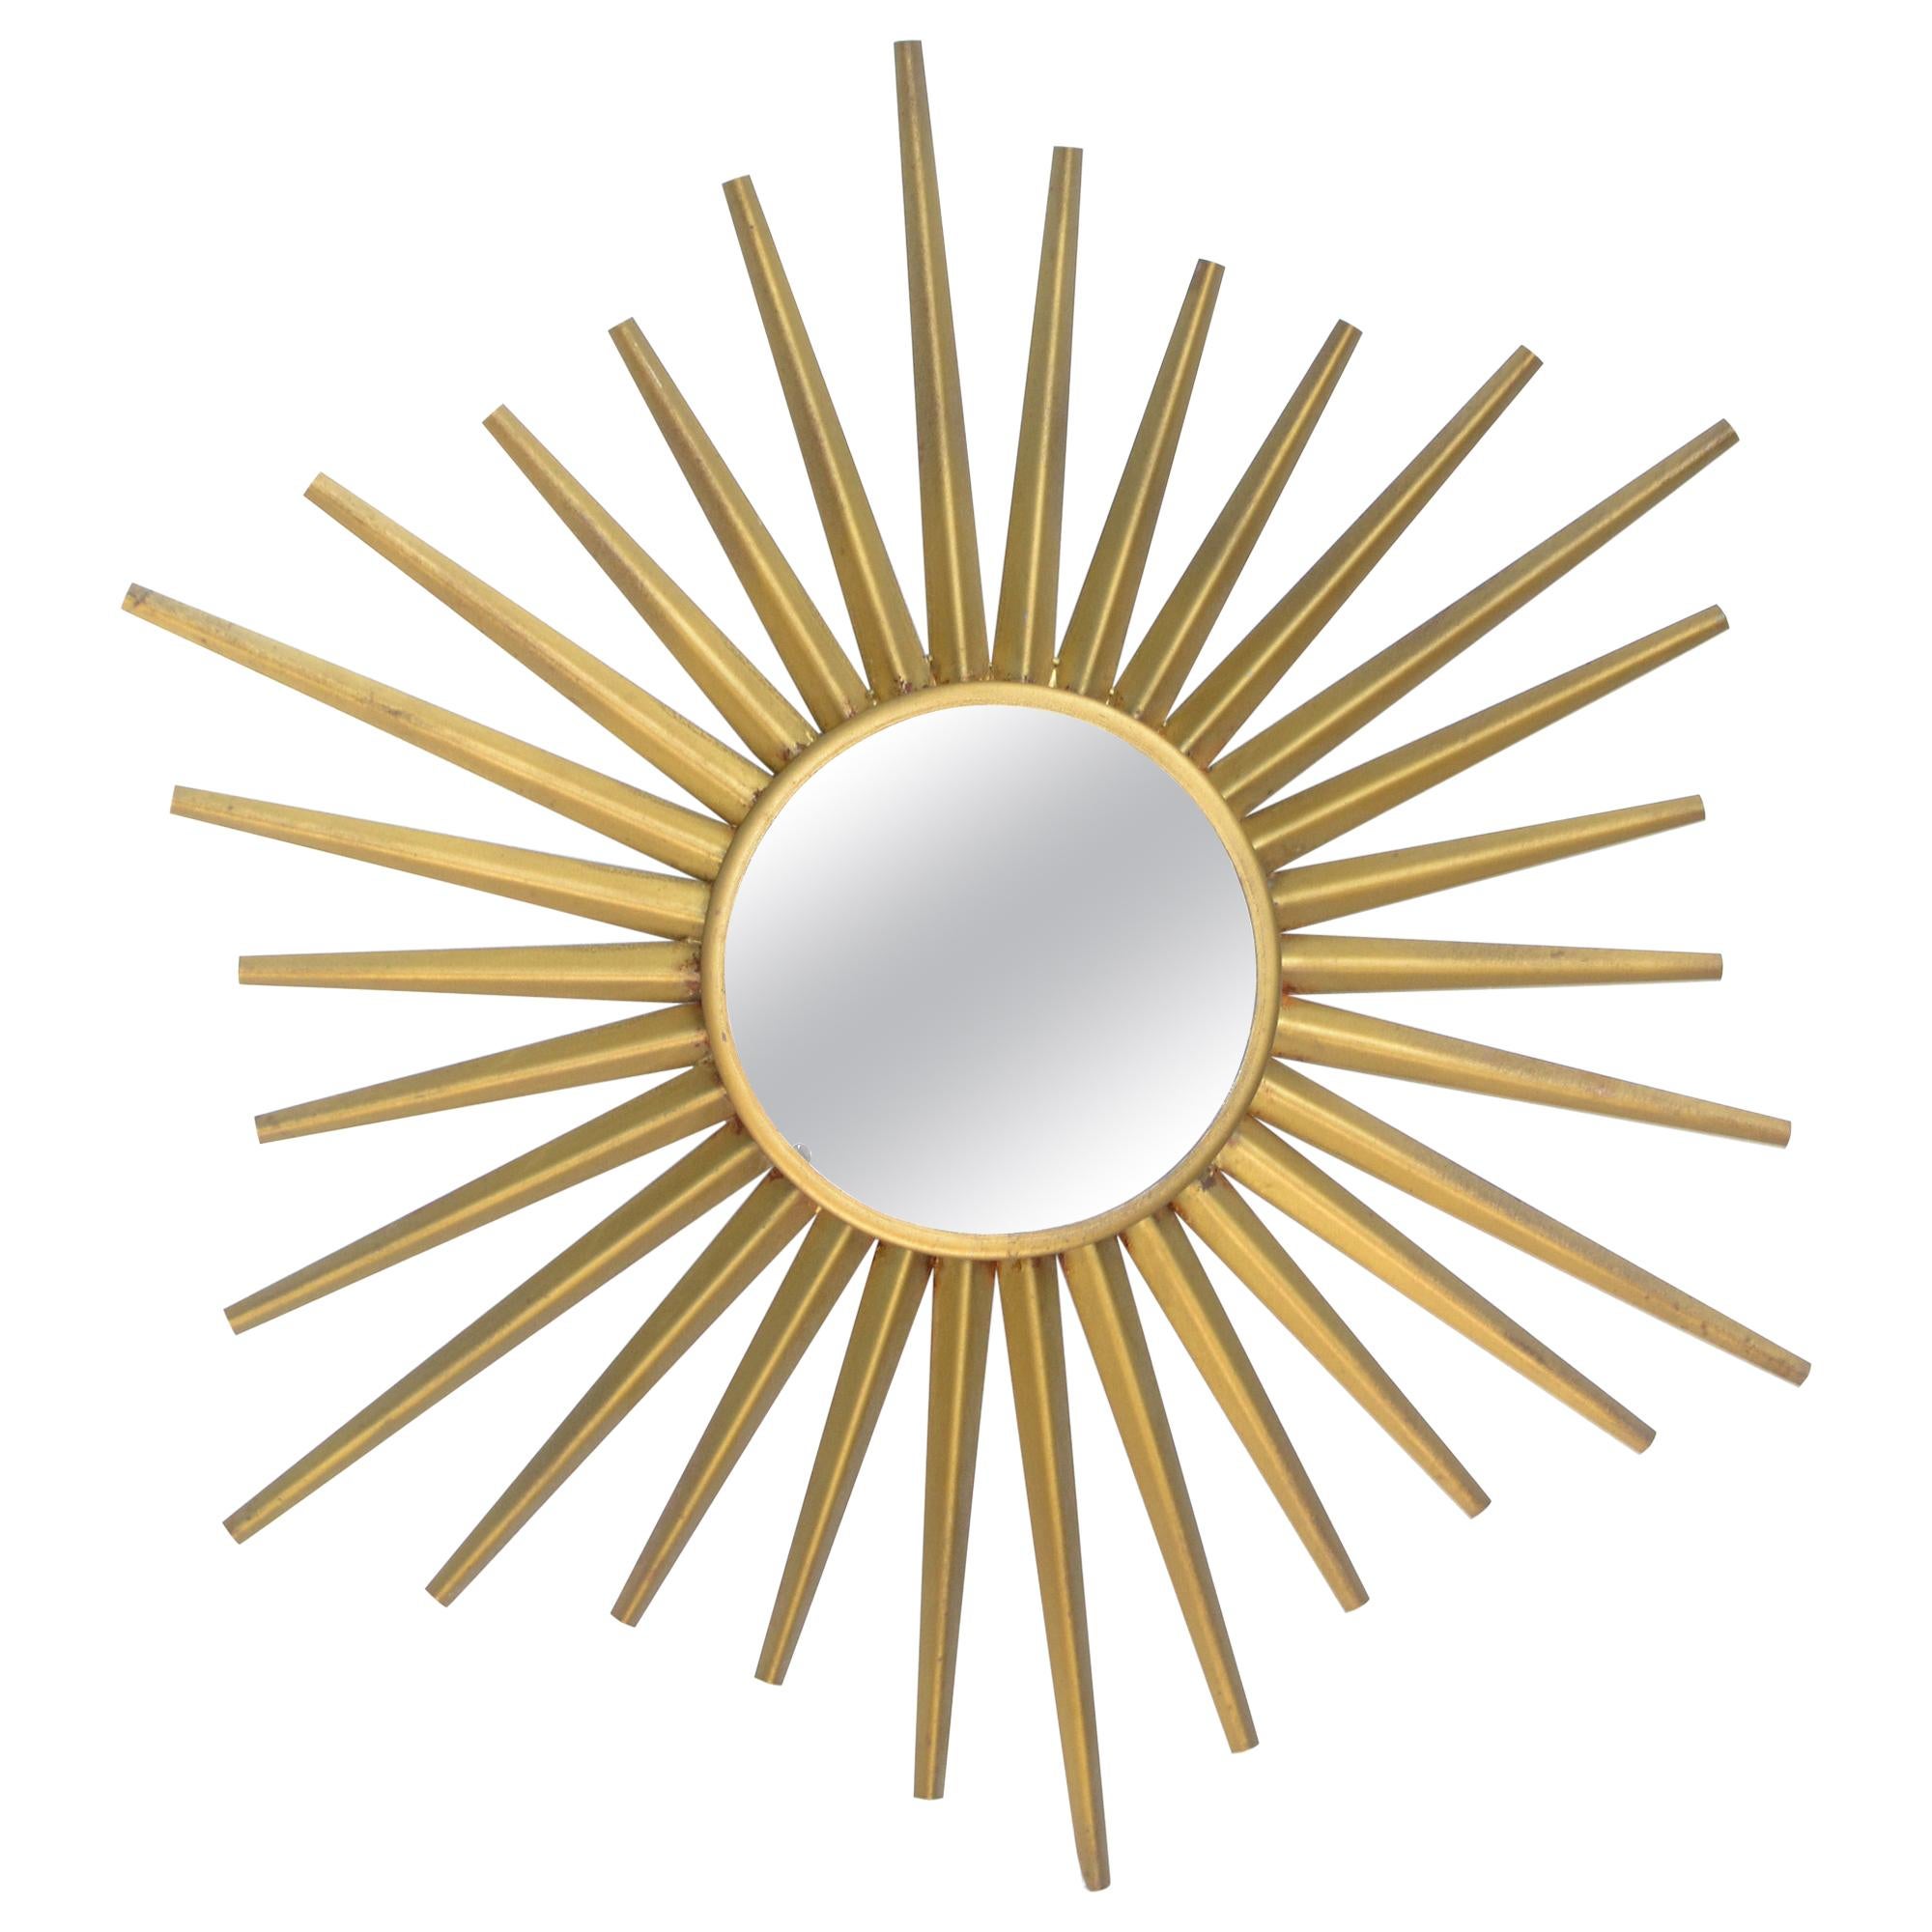 Sunburst Mirror in the Style of Vallauris French Mid-Century Modern Wall Mirror